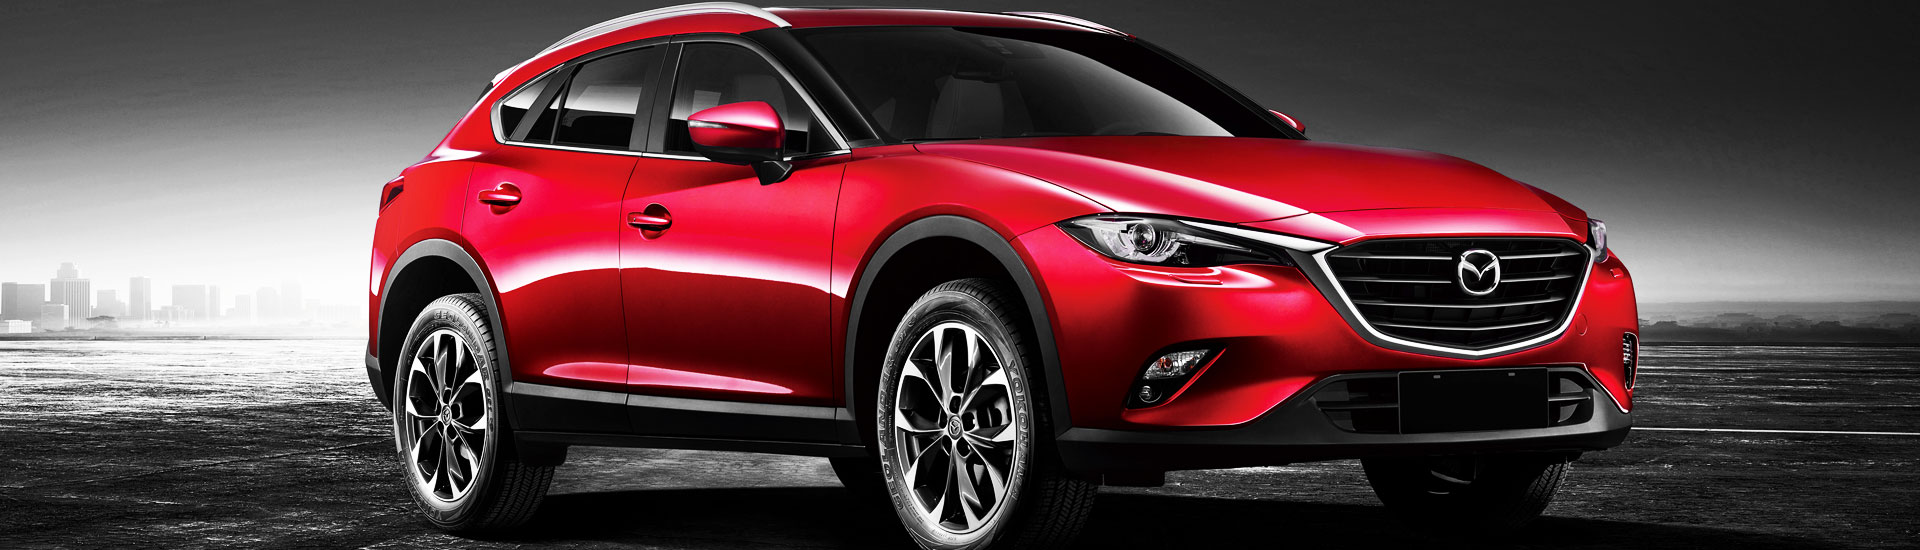 2018 Mazda Mazda3 Window Tint